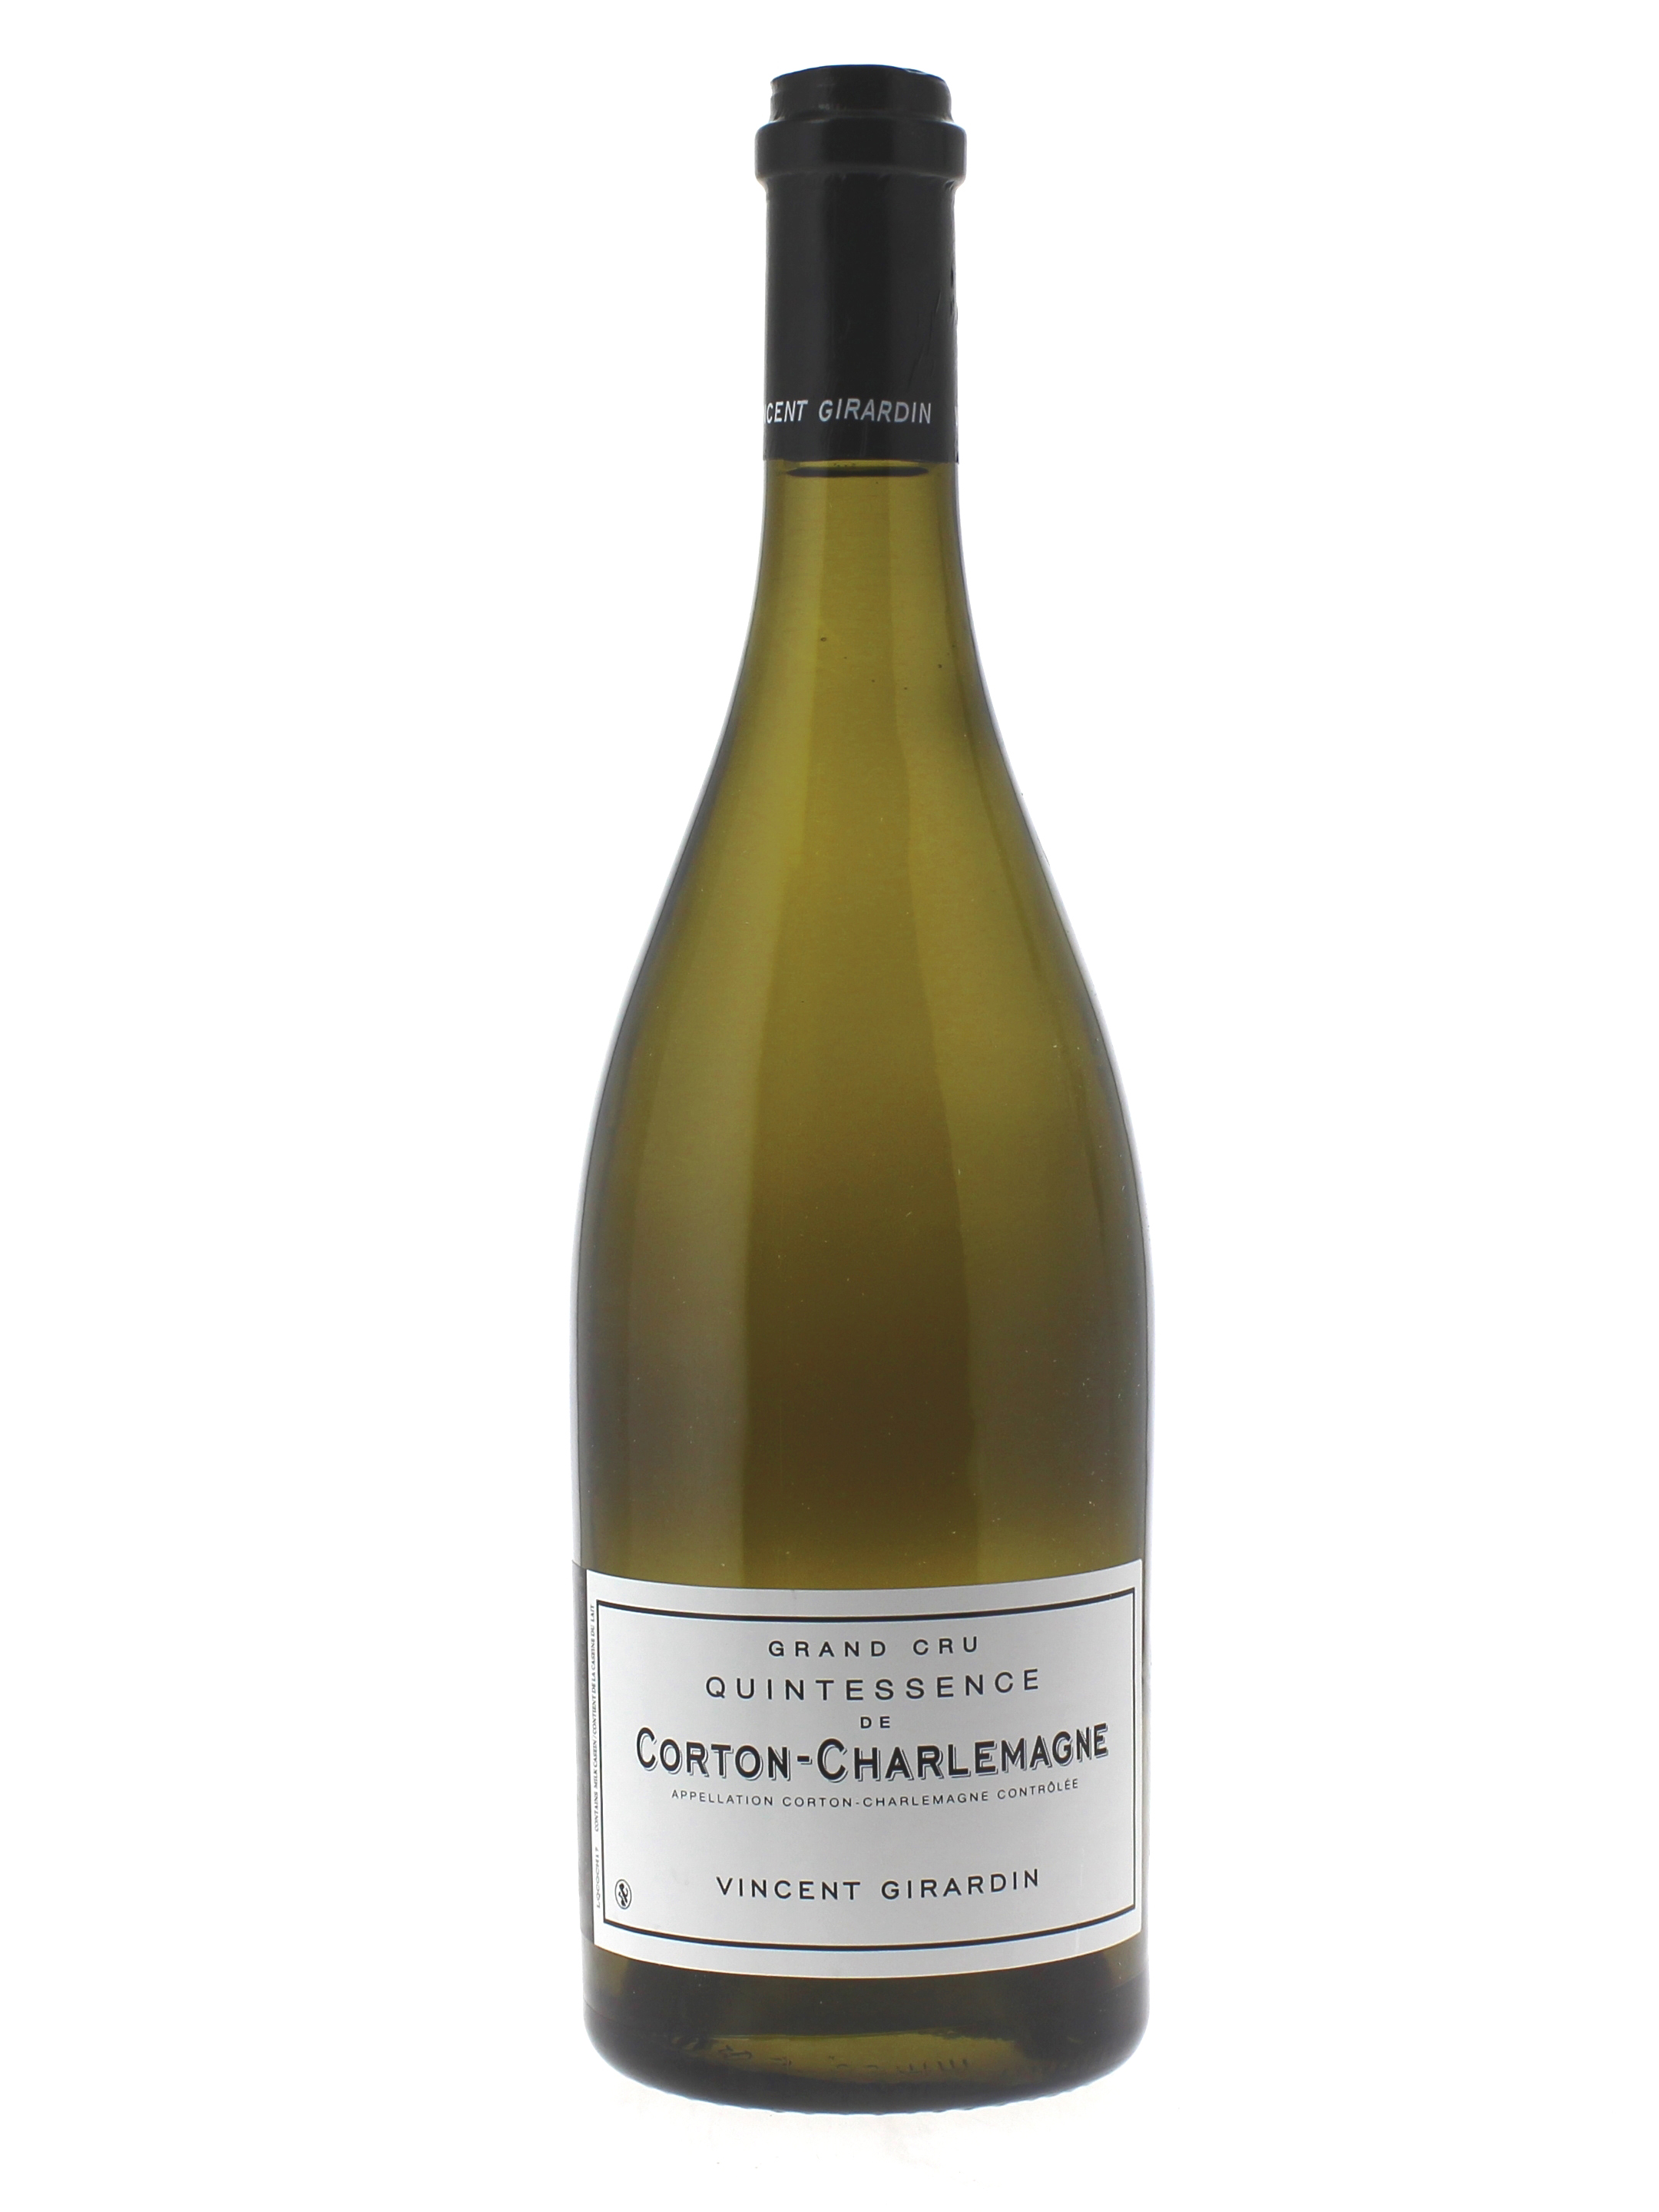 Corton charlemagne grand cru quintessence 2017 Domaine GIRARDIN Vincent, Bourgogne blanc